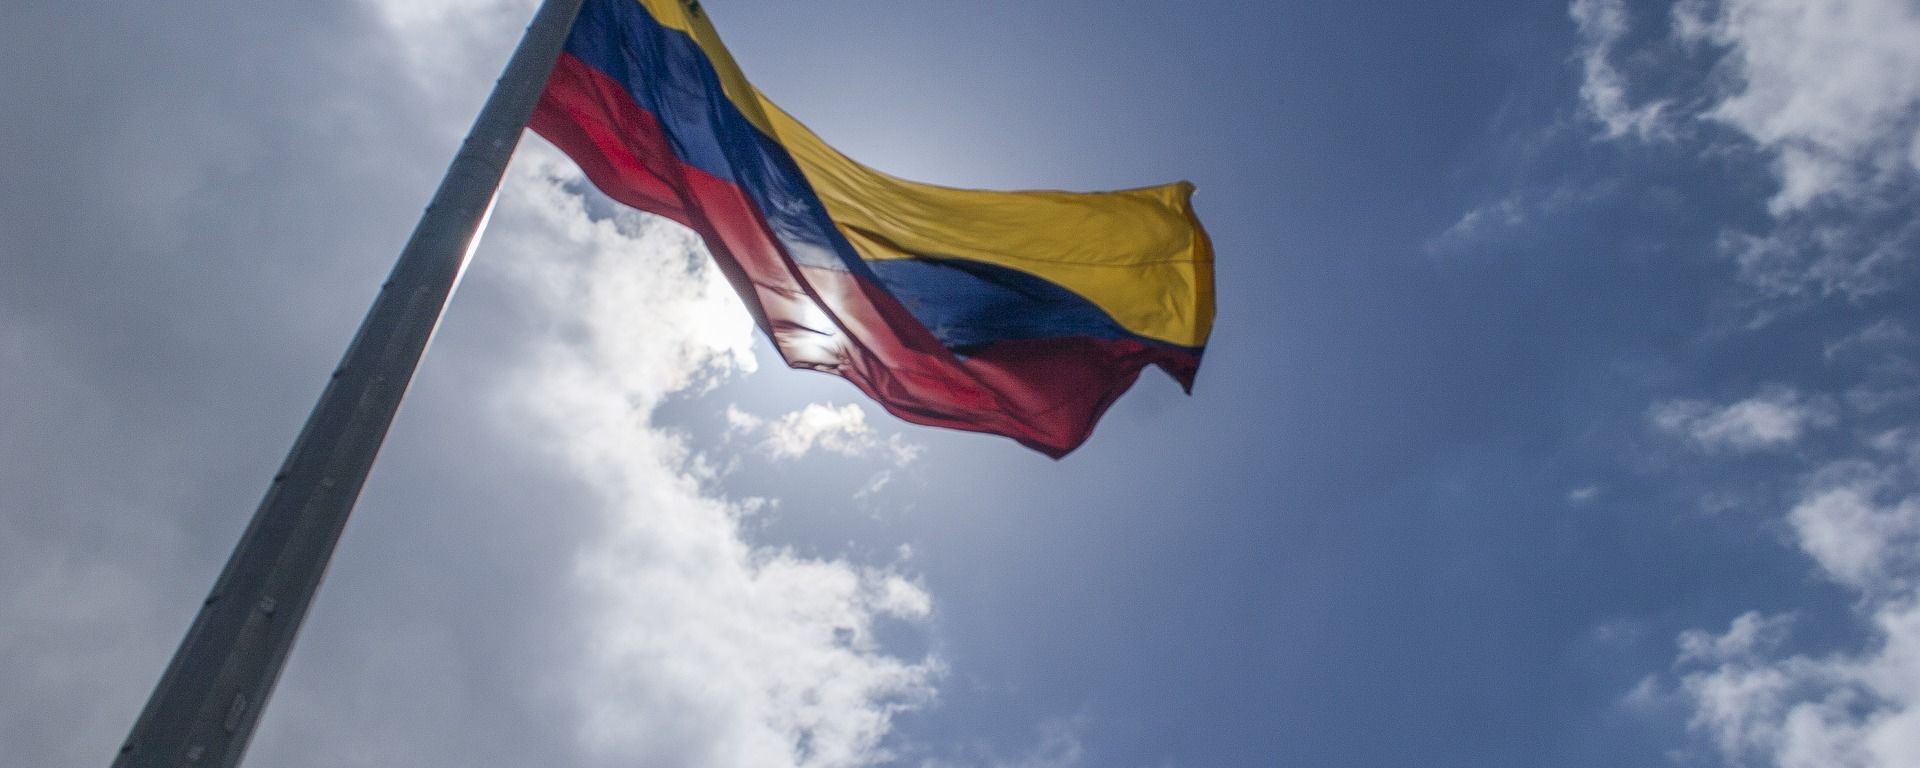 Bandera de Venezuela - Sputnik Mundo, 1920, 22.02.2021